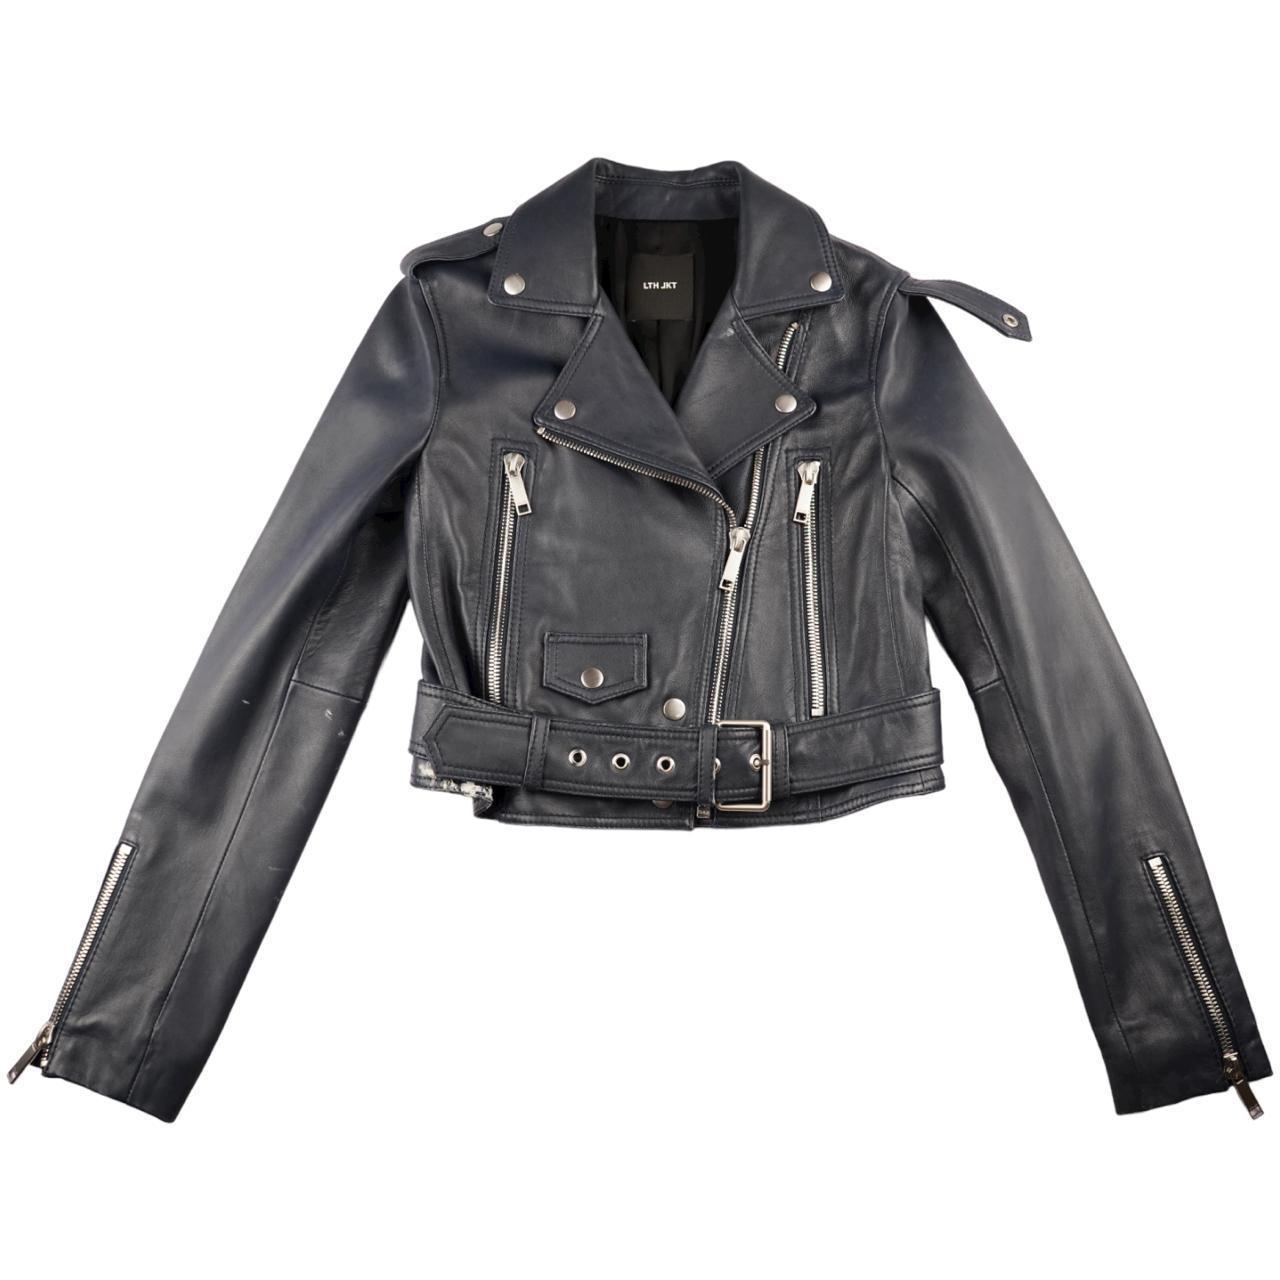 Leather Jacket Iconic grey 100% leather jacket by... - Depop